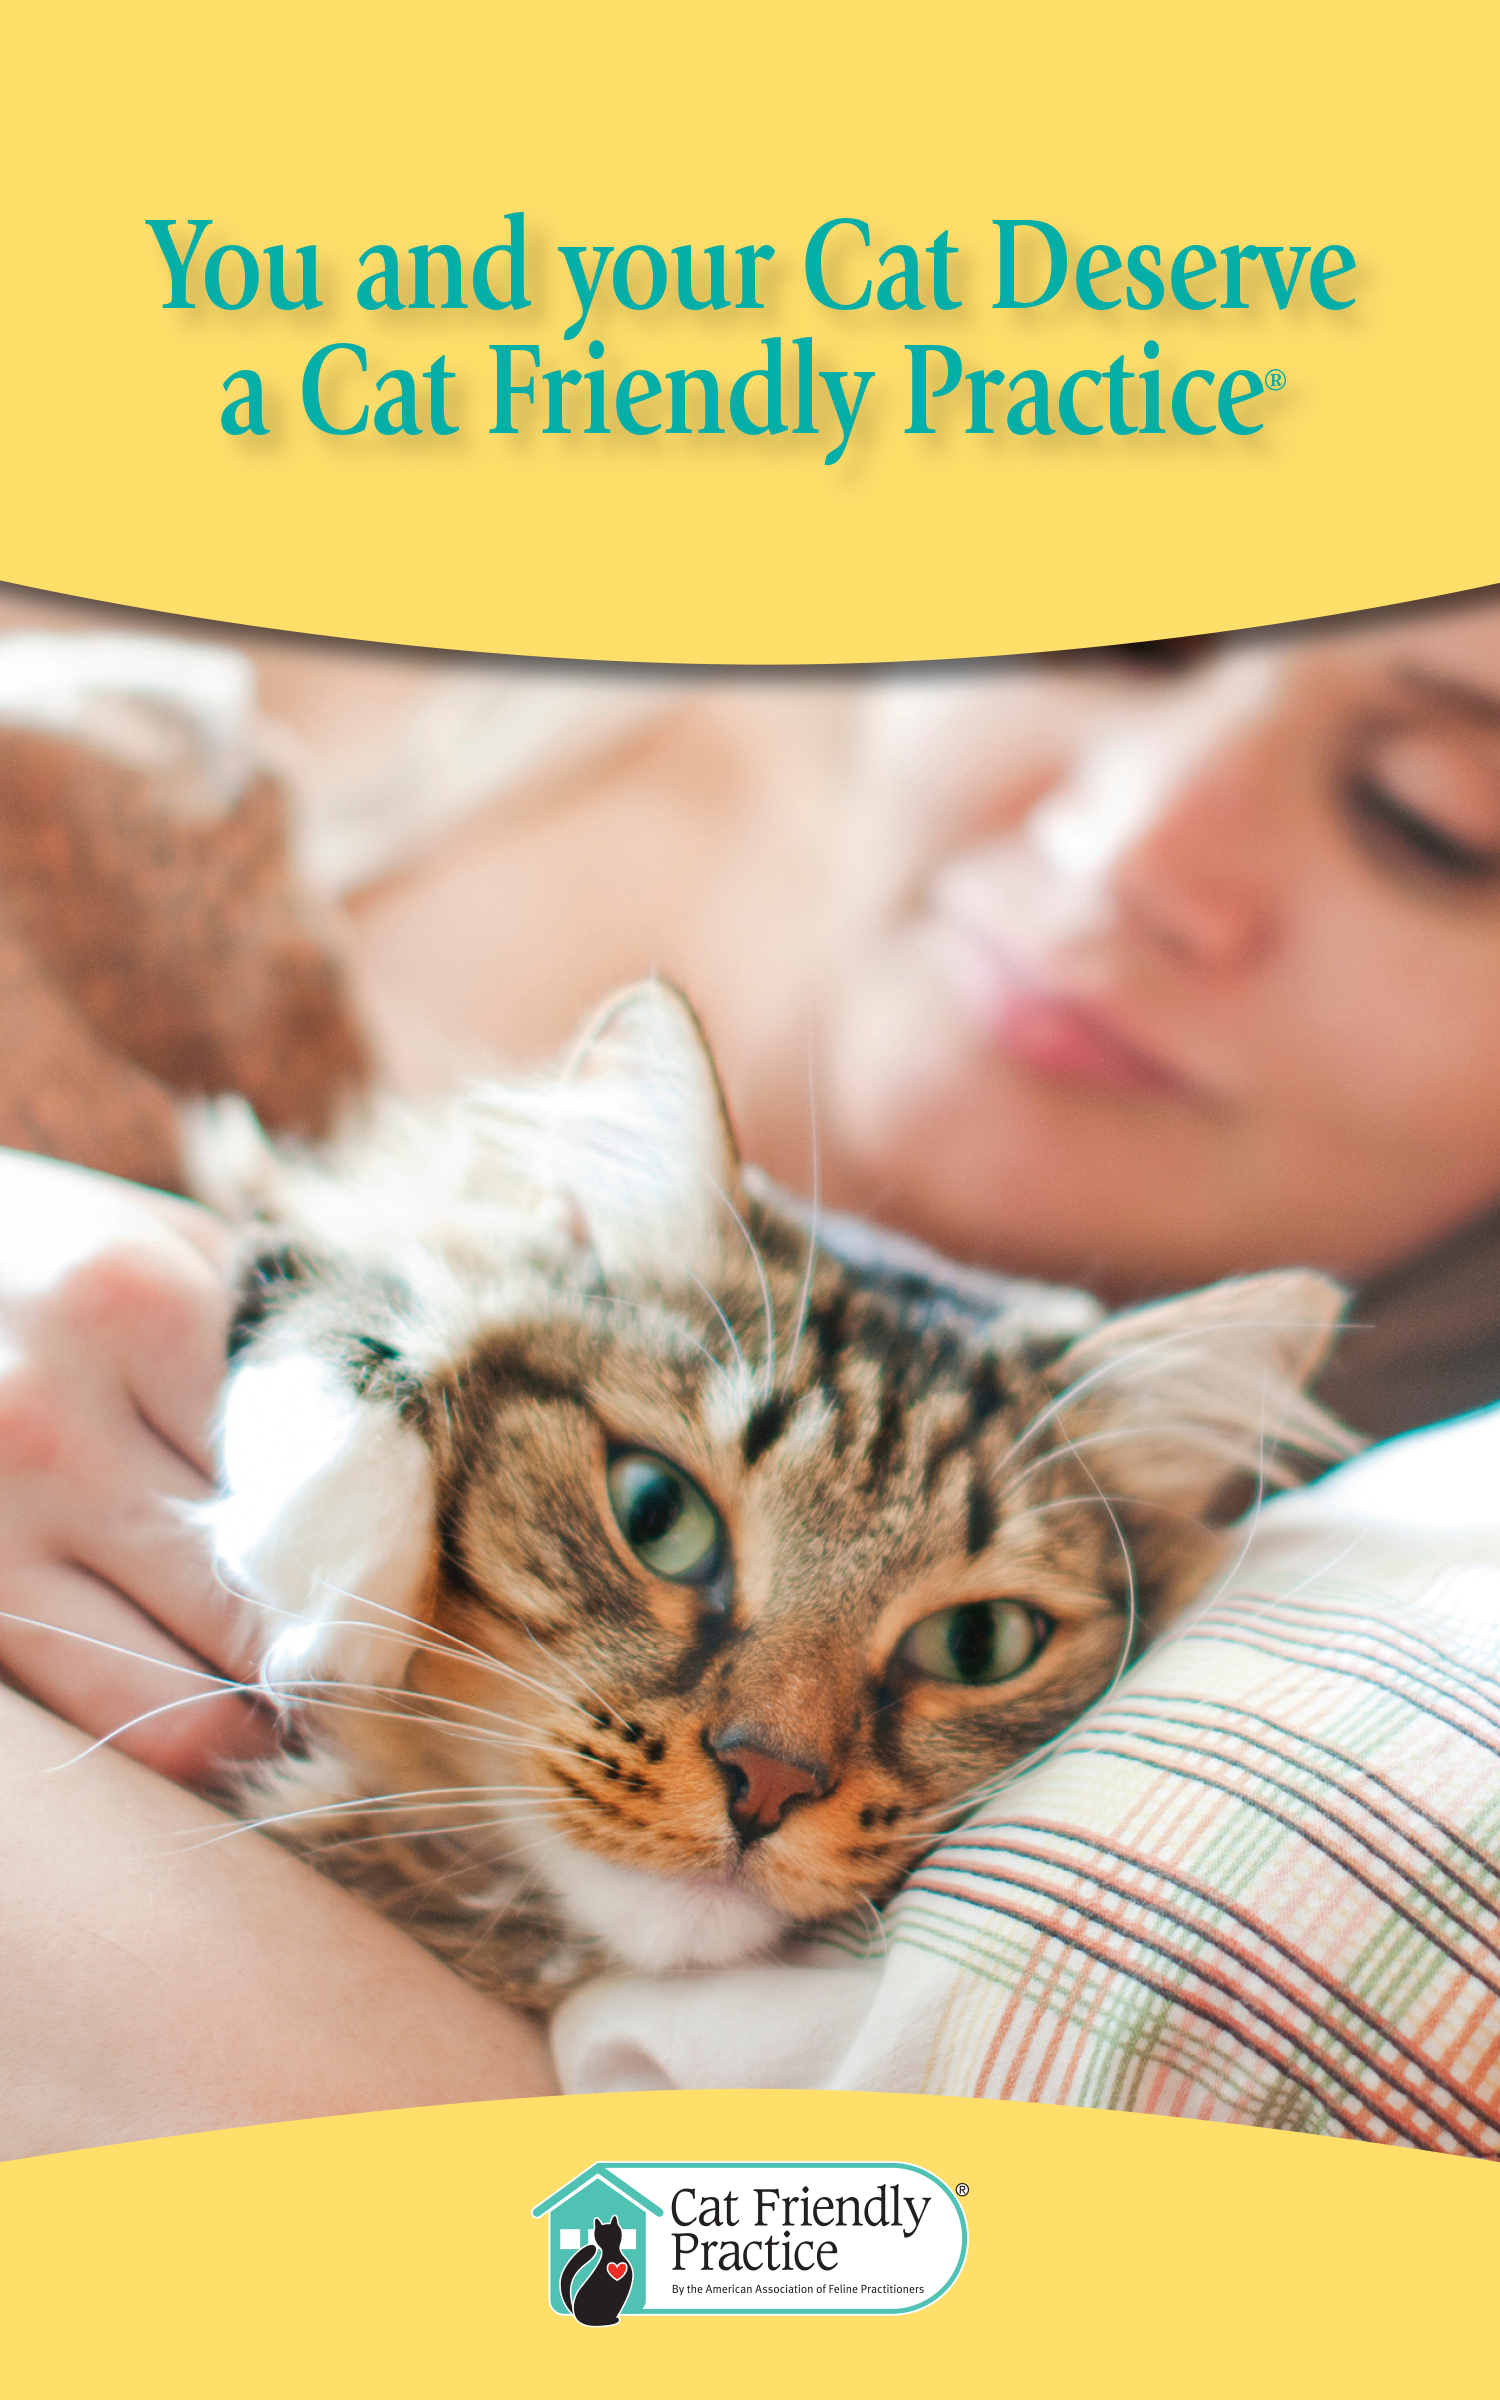 Cat Friendly Practice® - Cat Friendly Homes